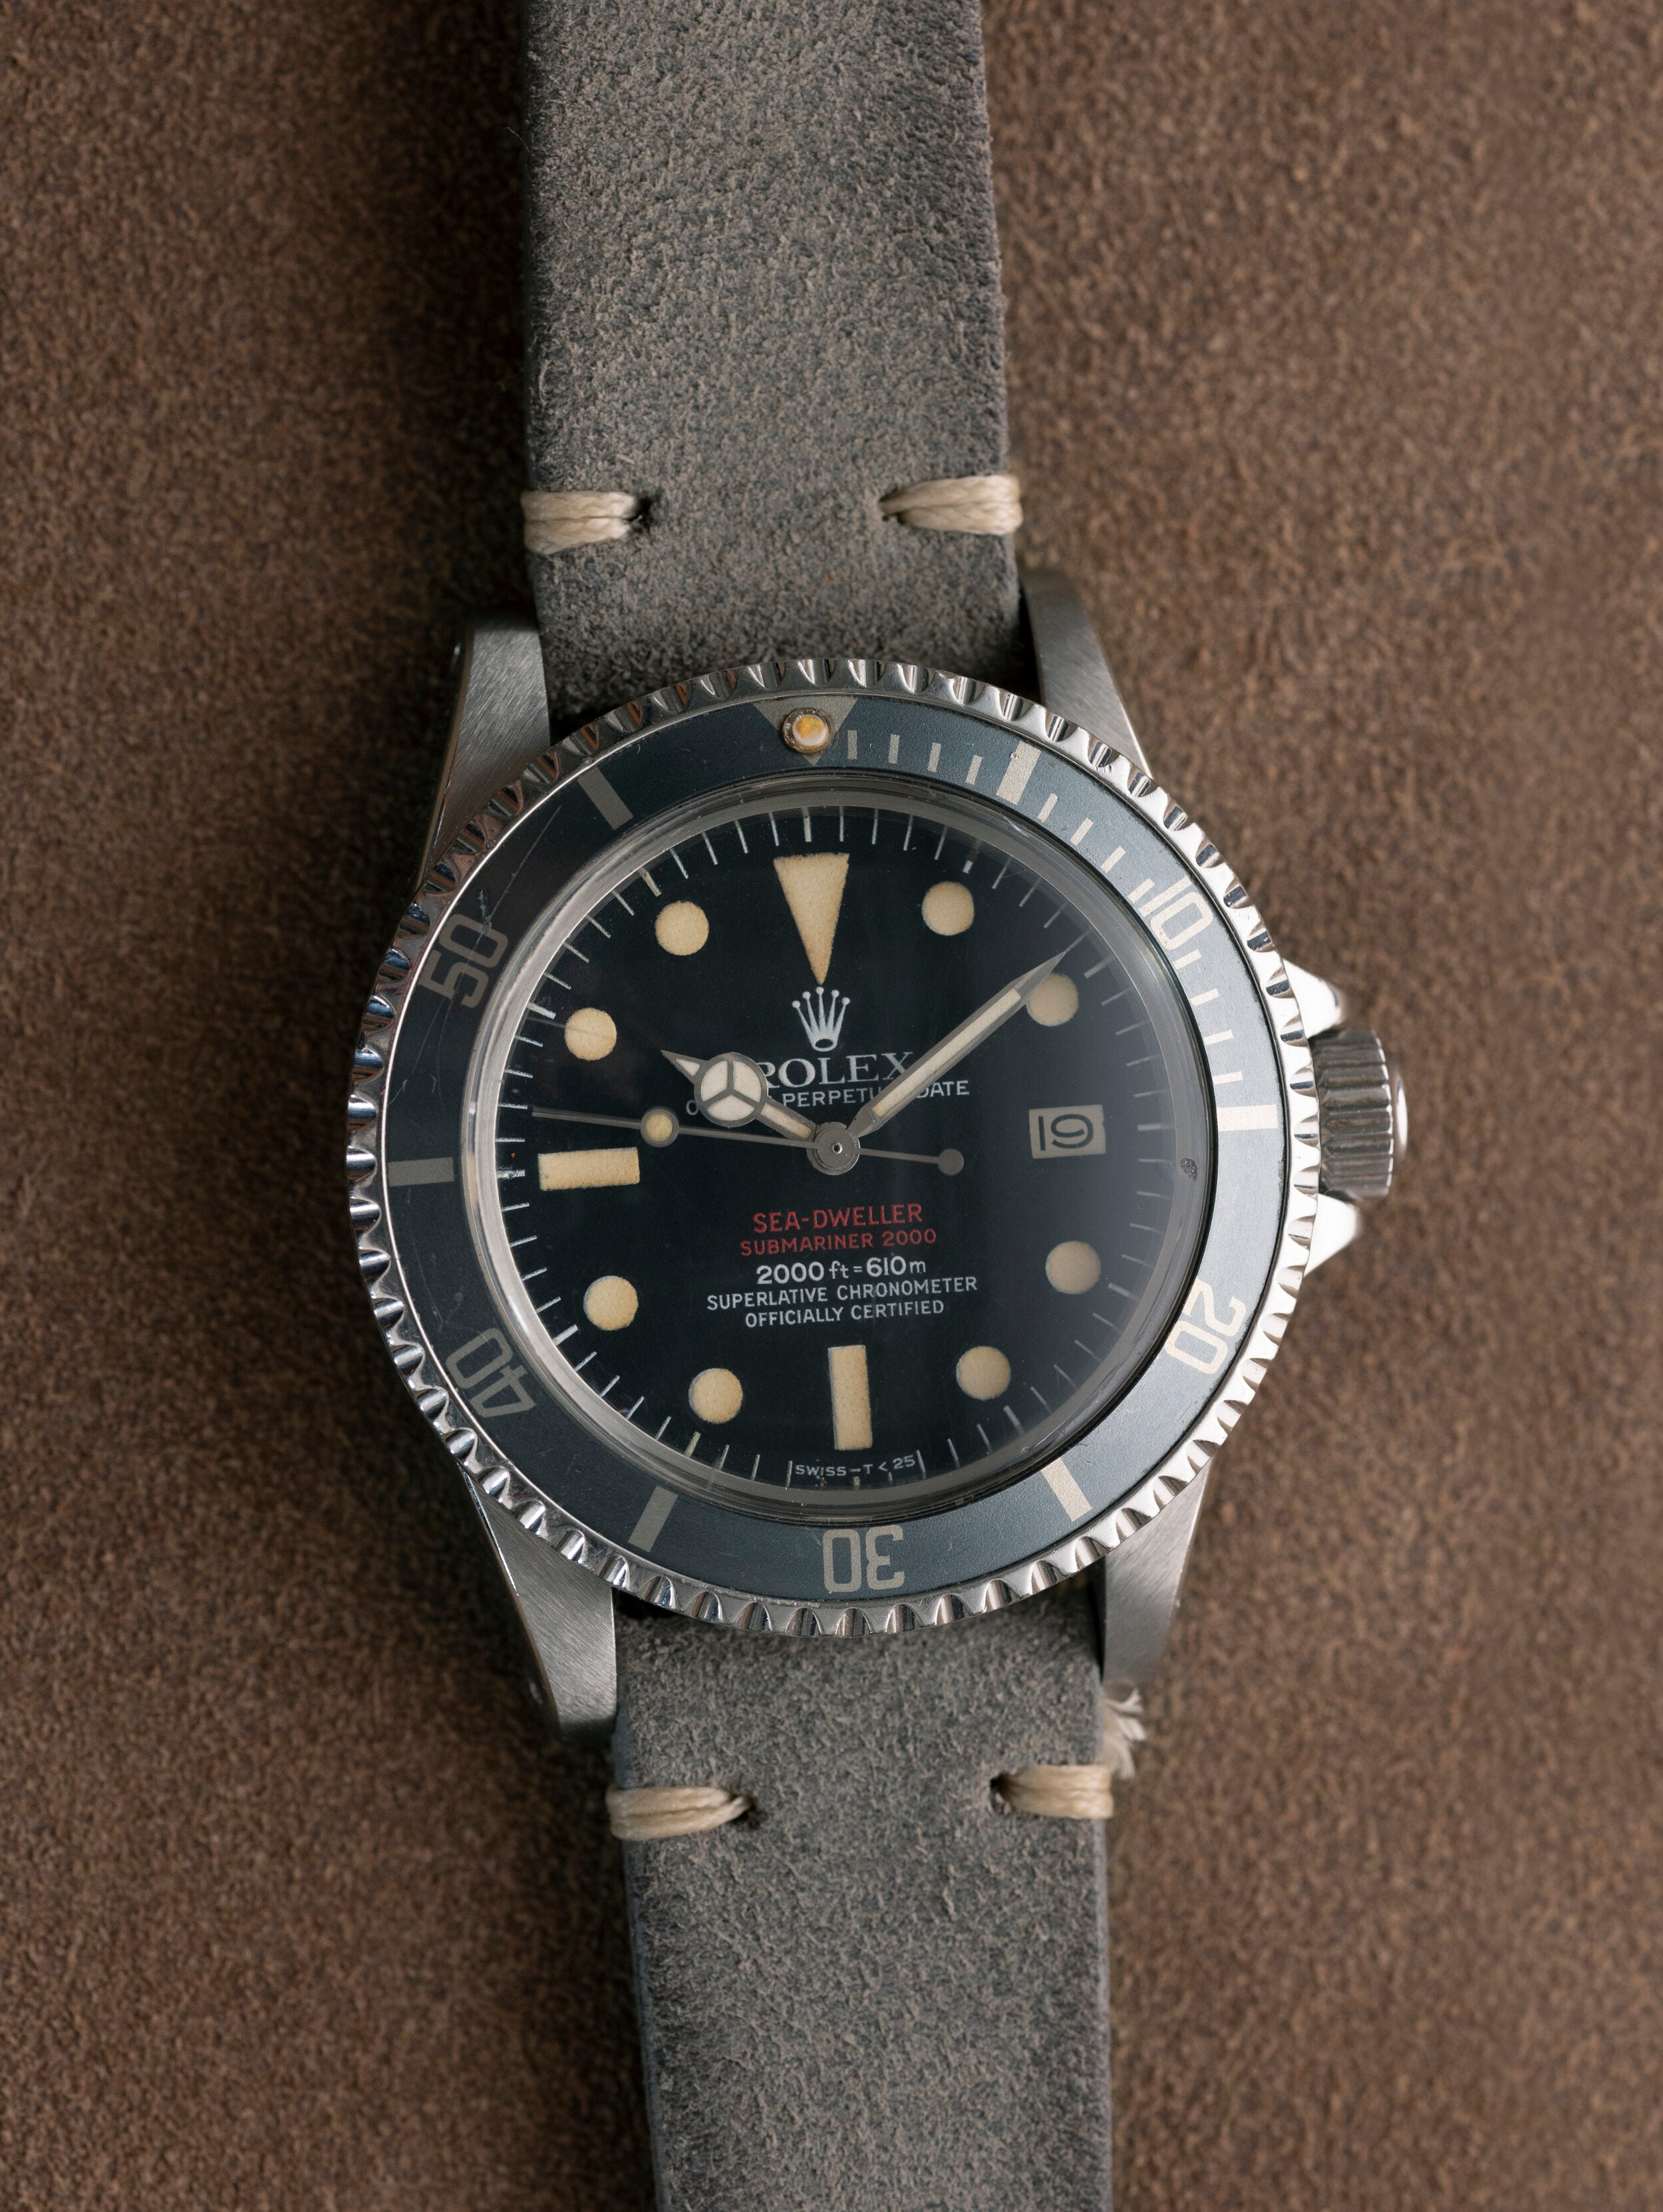 Tasso Grey JPM x Oliver & Clarke Vintage Leather Watch Strap